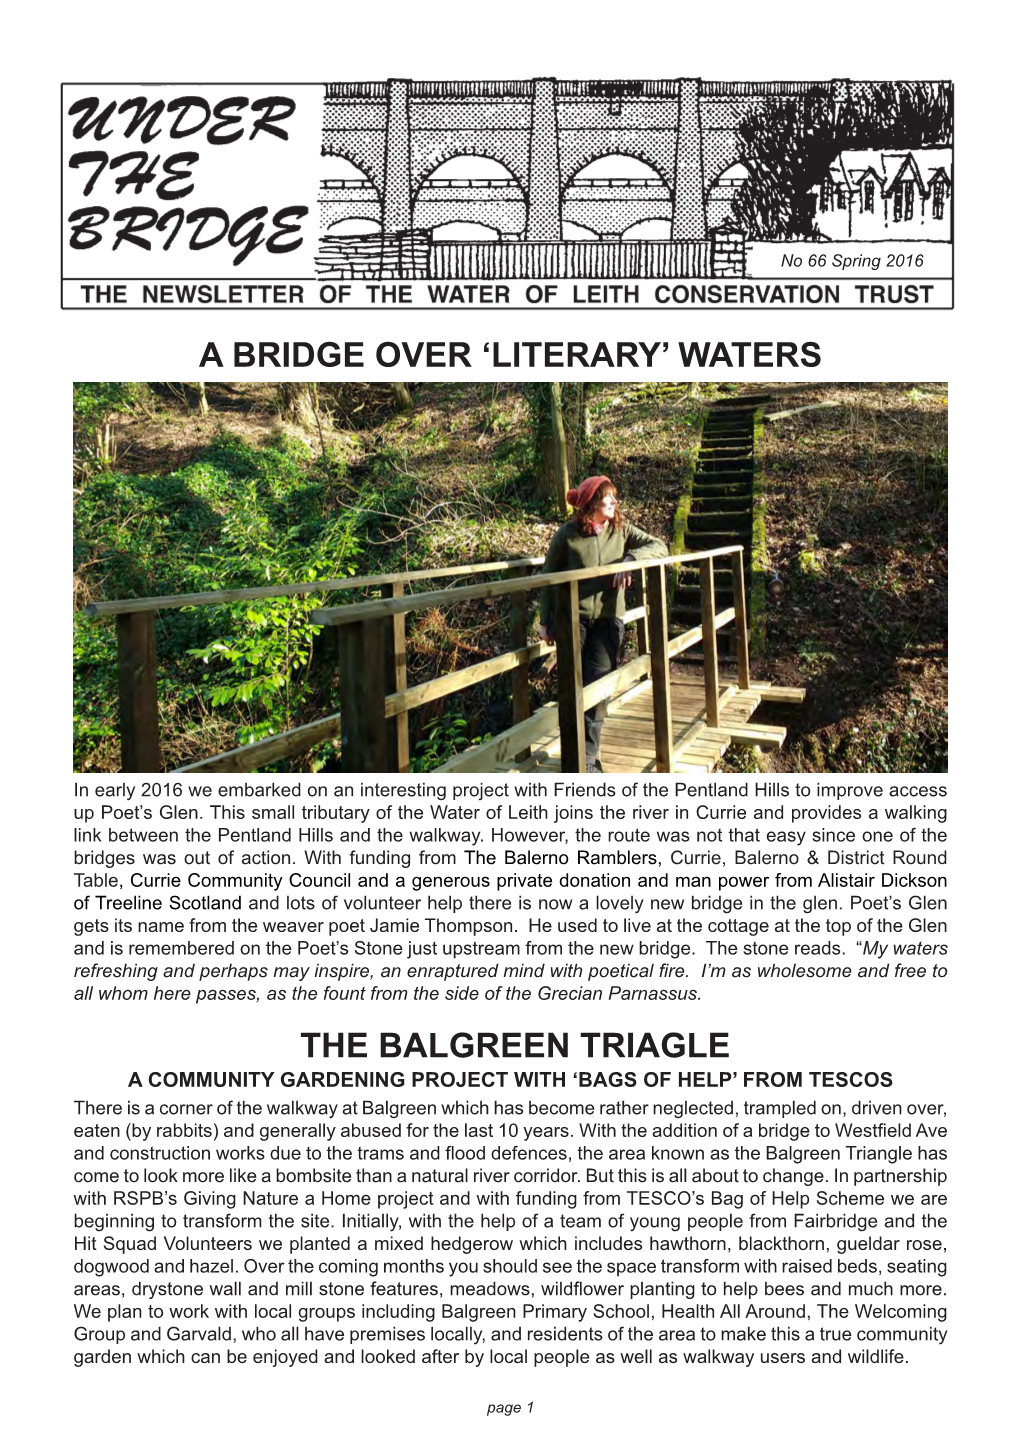 A Bridge Over 'Literary' Waters the Balgreen Triagle